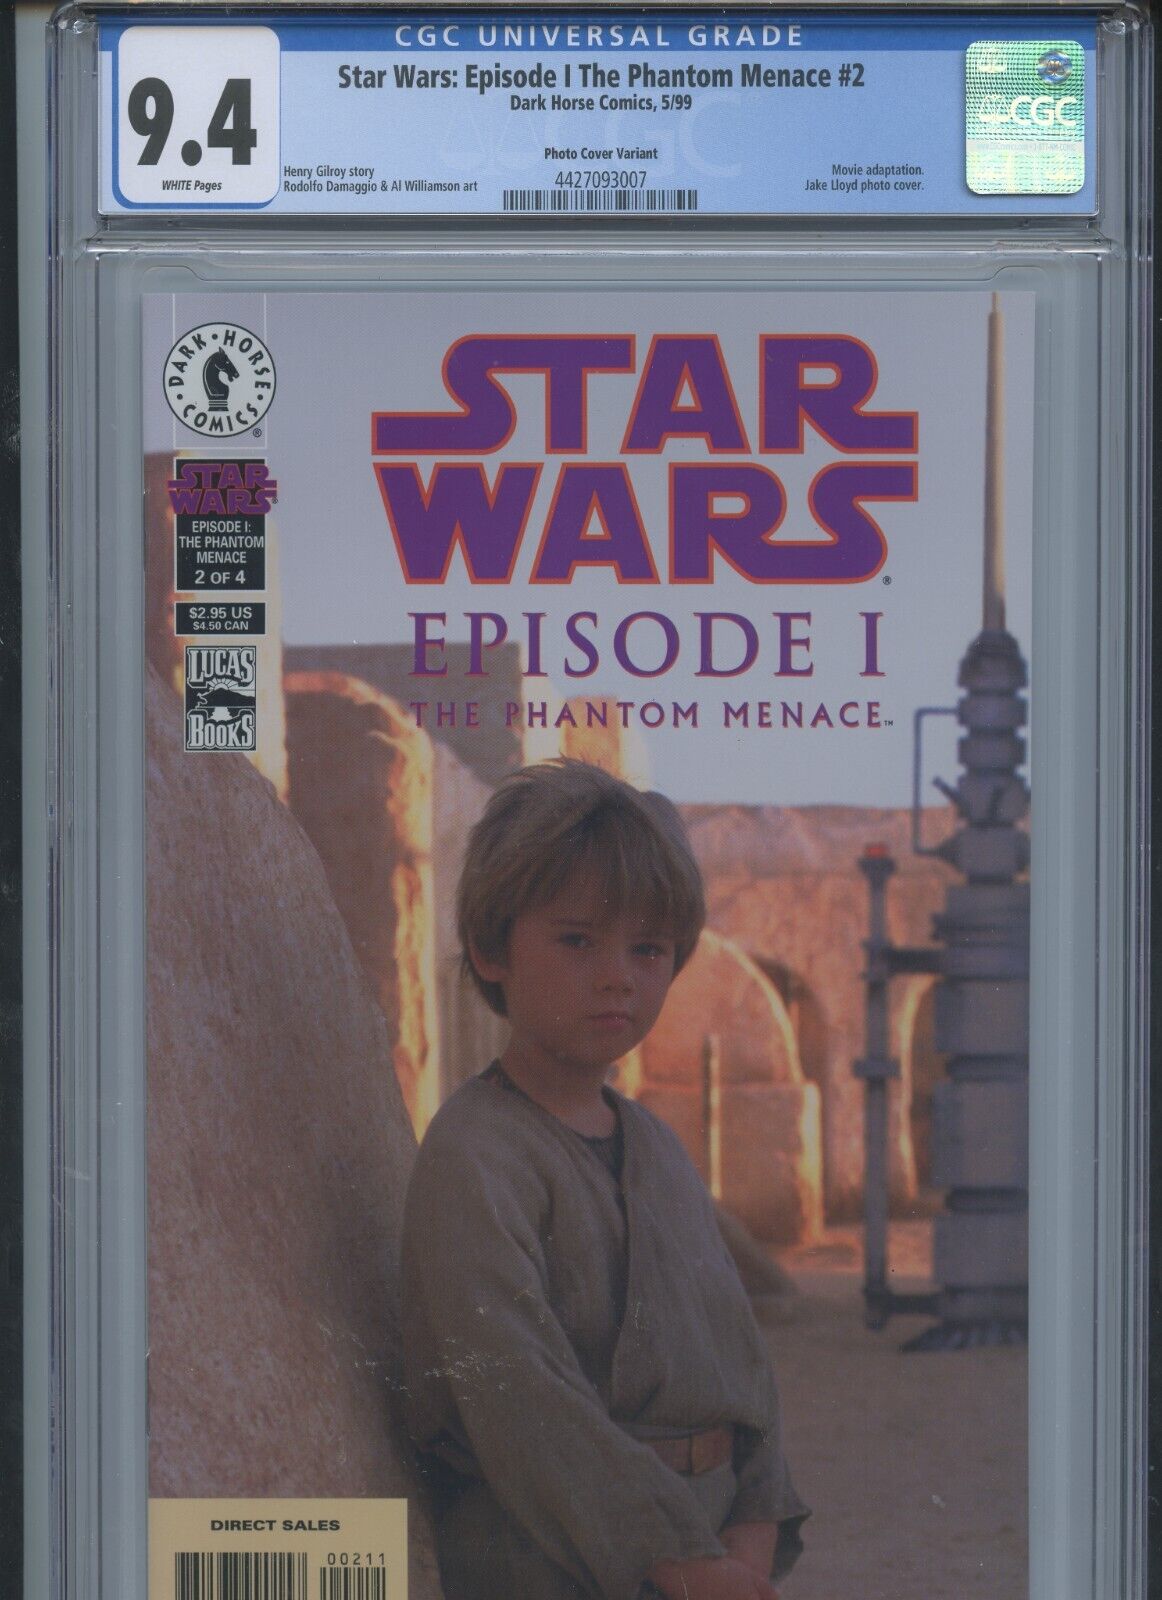 Star Wars: Episode I The Phantom Menace #2 1999 CGC 9.4 (Photo Cover)